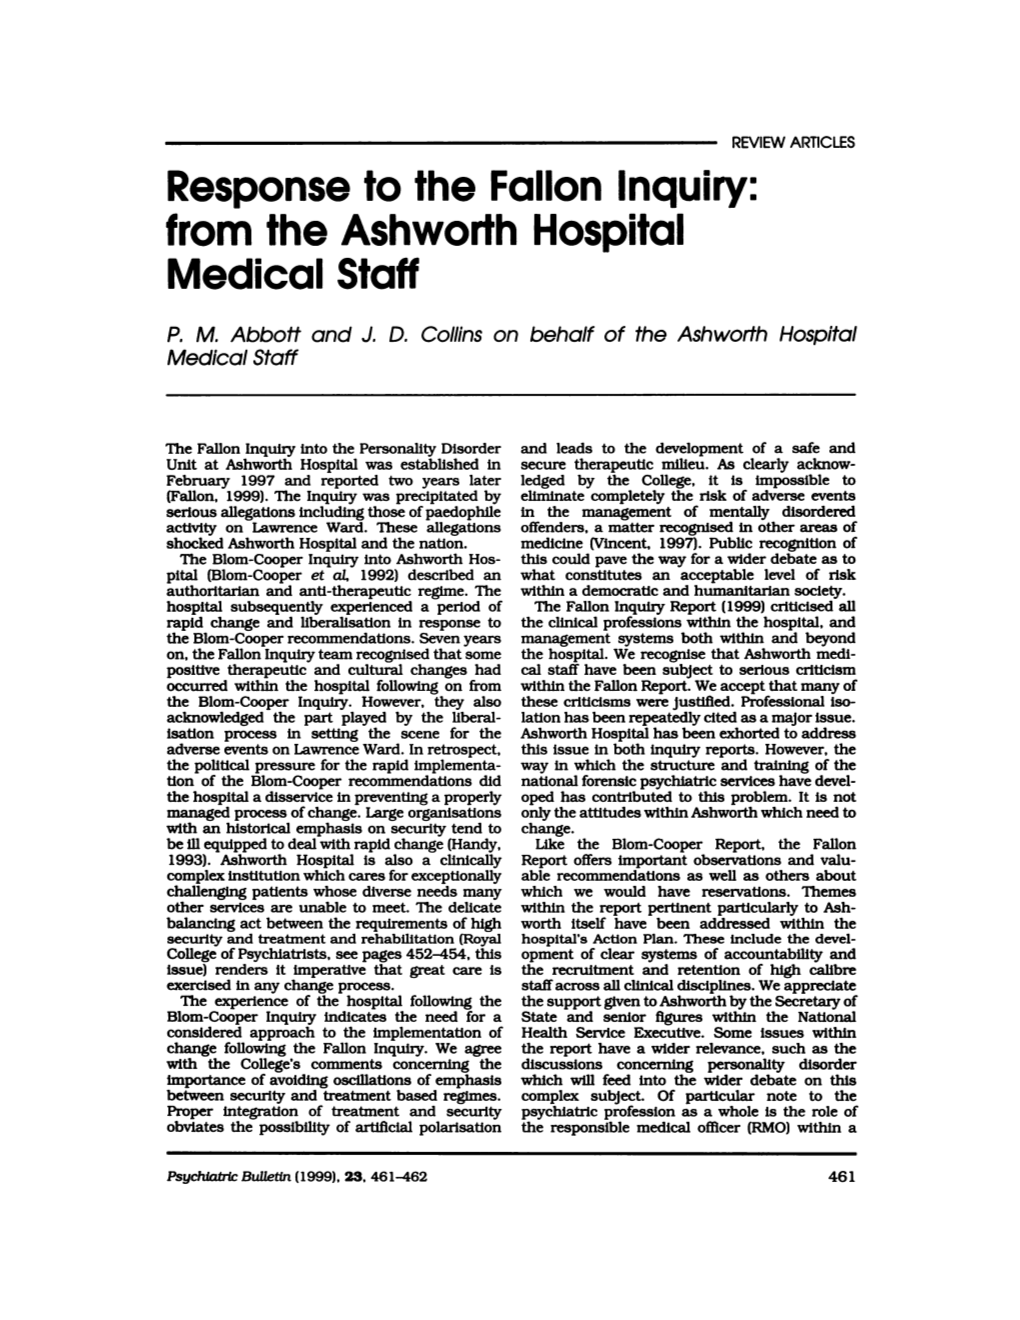 Responseto the Fallã³ninquiry: from the Ashworthhospital Medical Staff